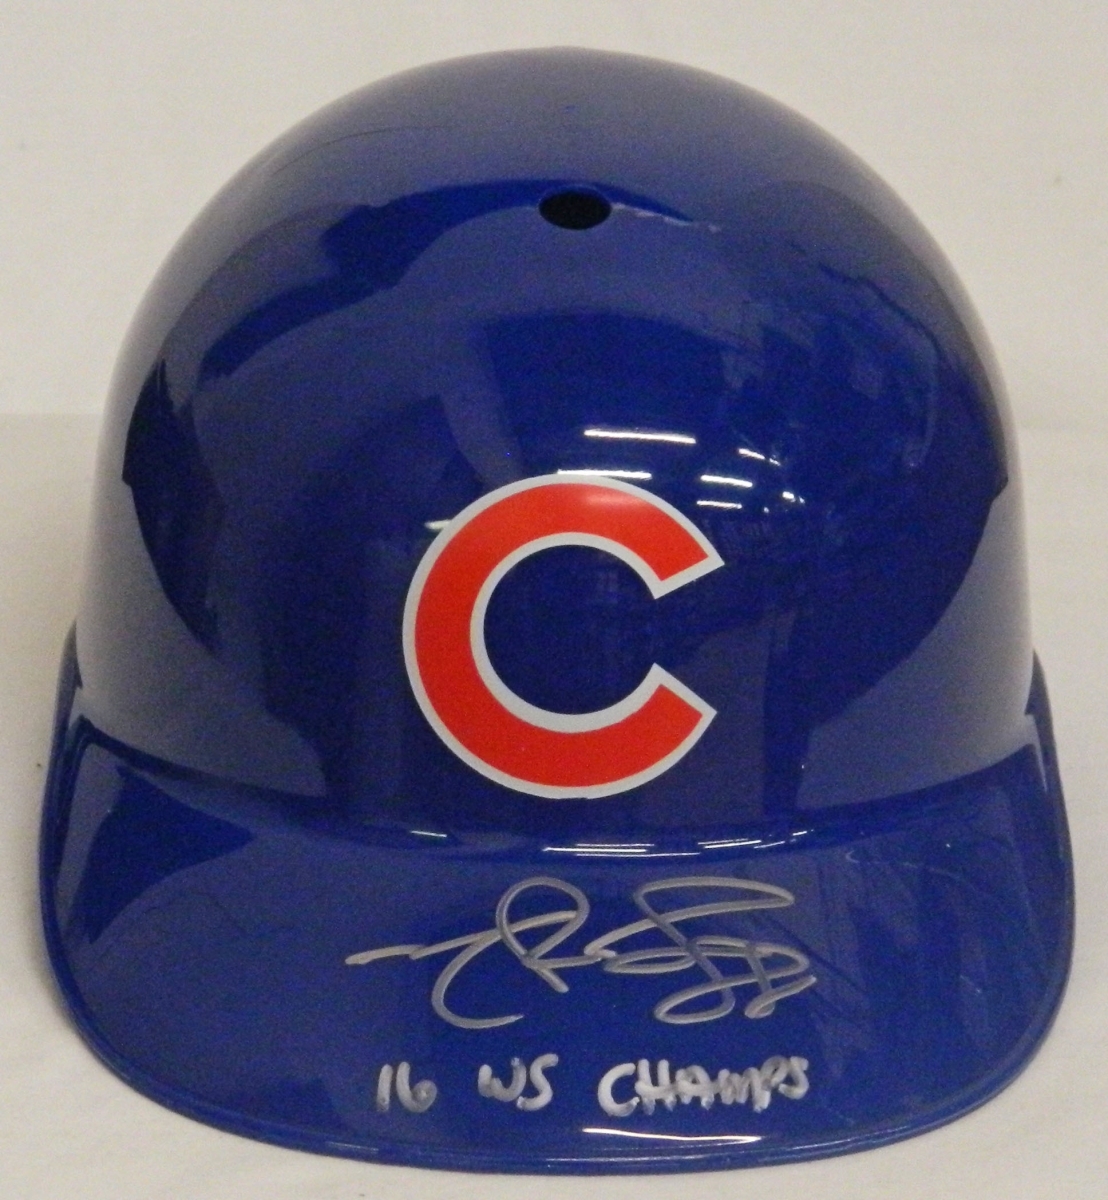 Picture of Schwartz Sports Memorabilia SZCBTH101 Matt Szczur Signed Chicago Cubs Replica Batting Helmet with 16 WS Champs